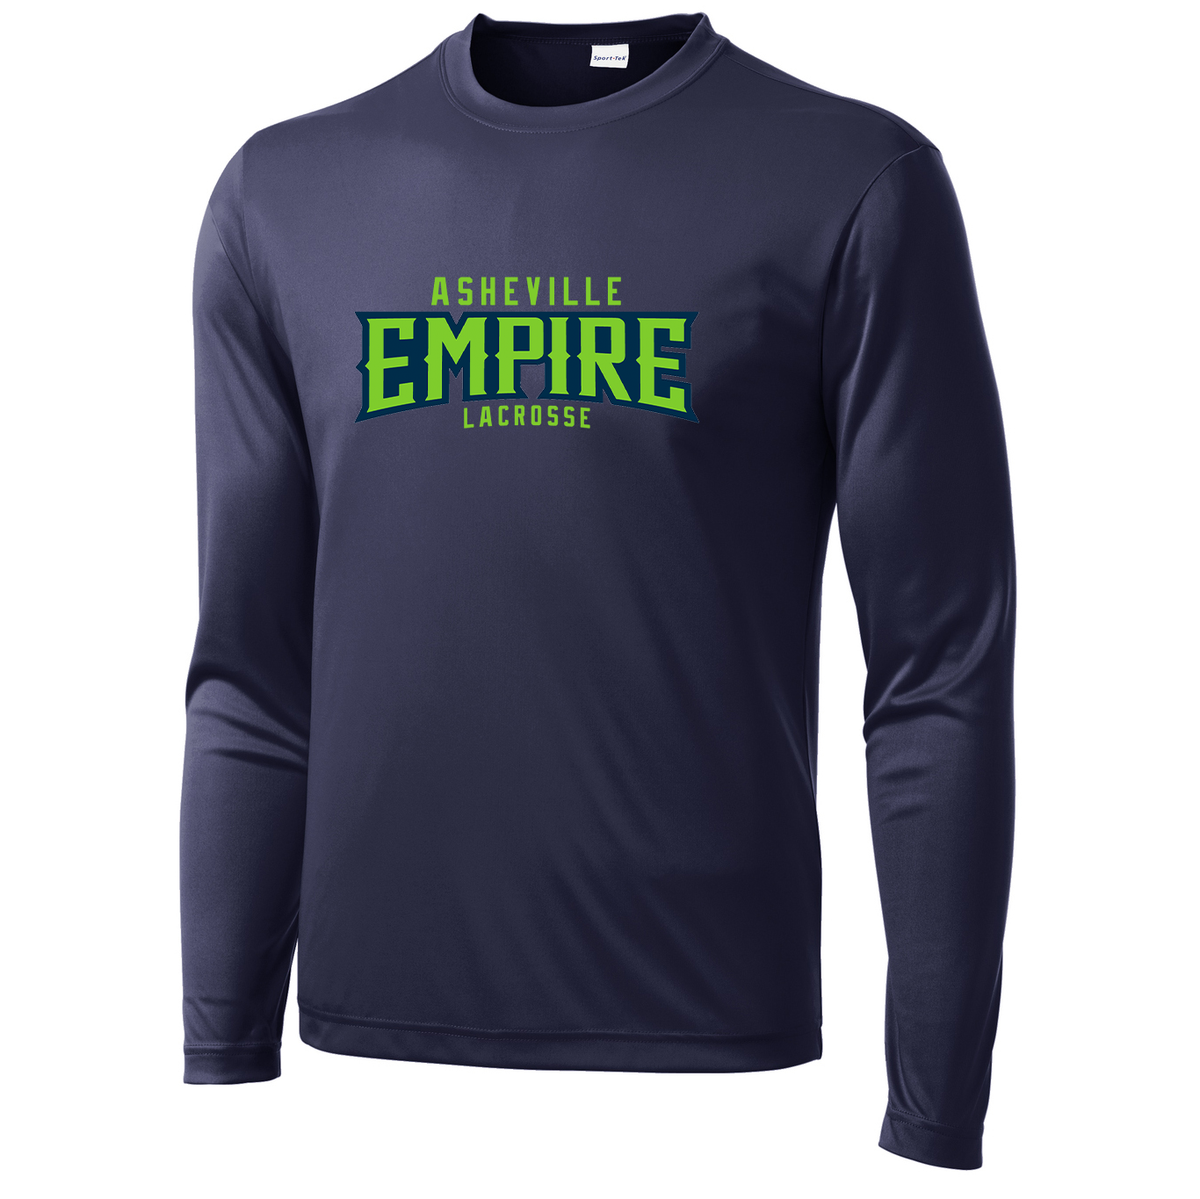 Asheville Empire Lacrosse Long Sleeve Performance Shirt